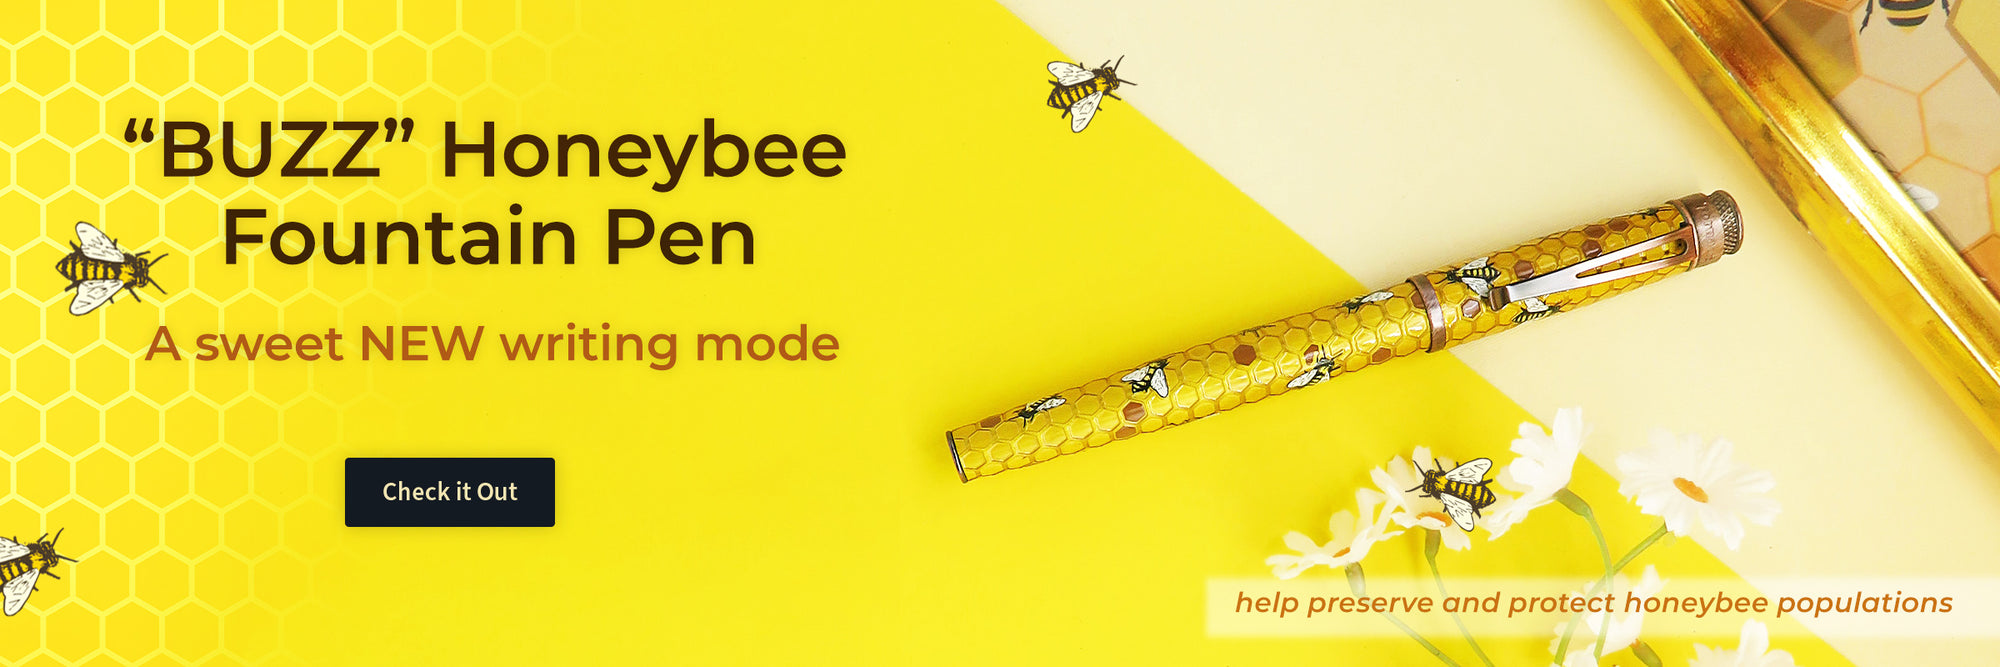 New writing Mode - Buzz Honeybee now in Fountain Pen